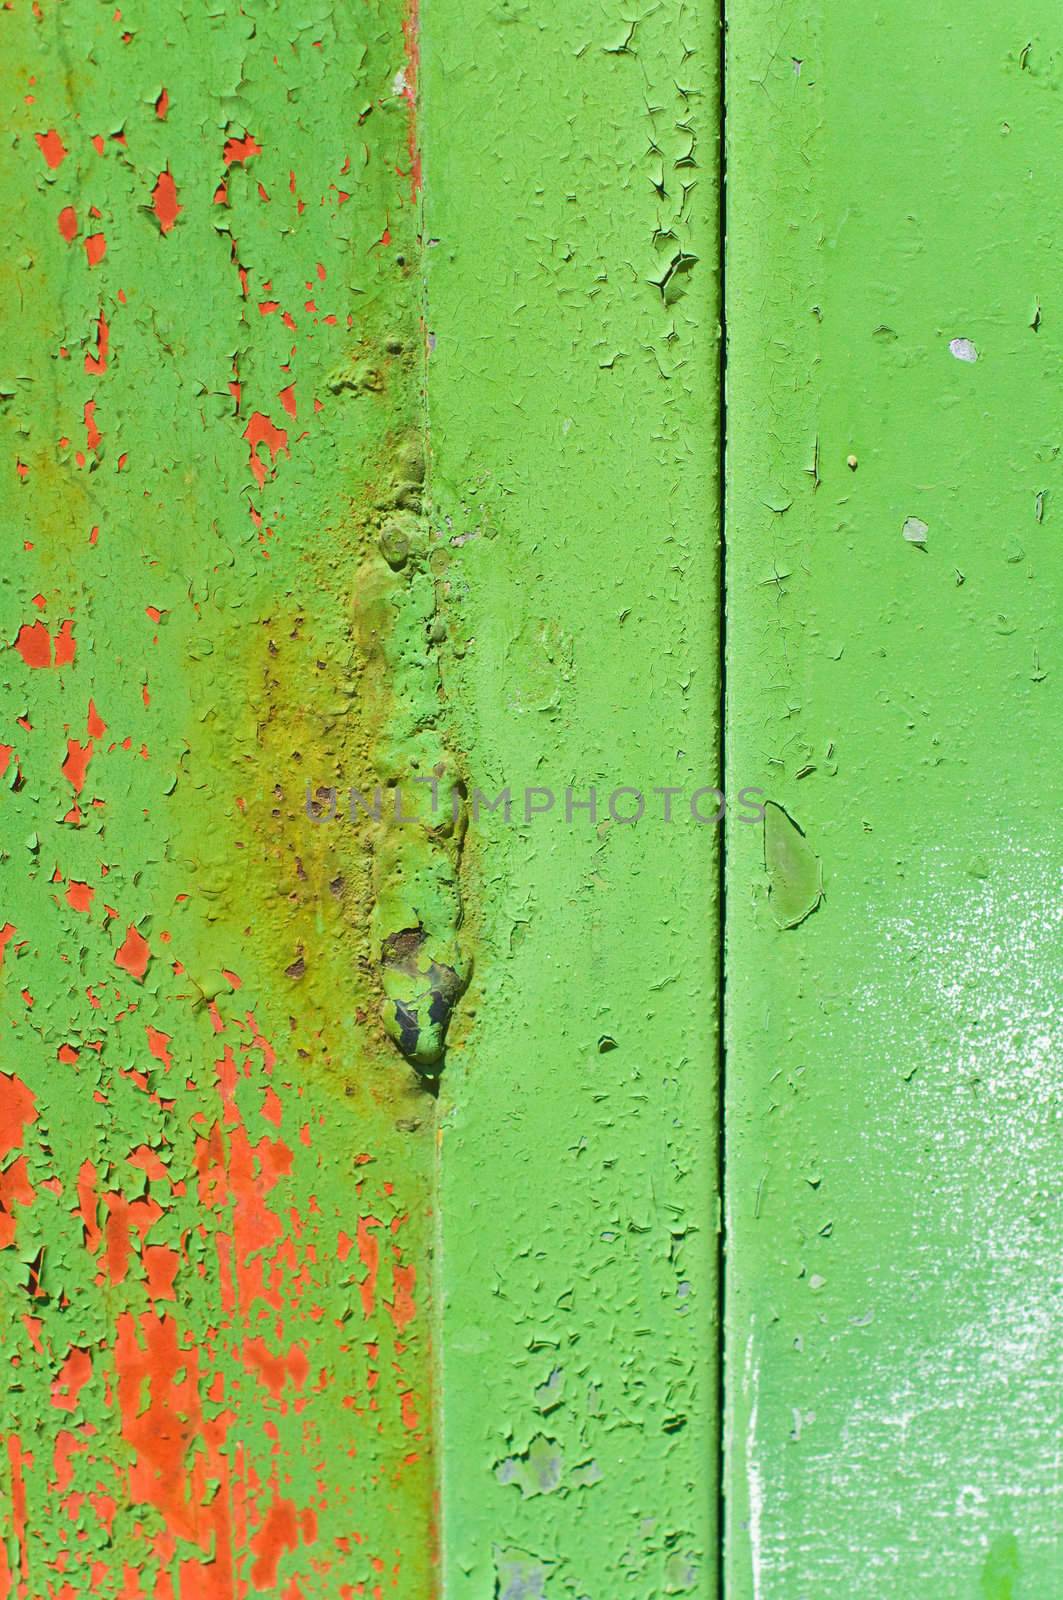 Close up shot of a metal door with green peeling paint